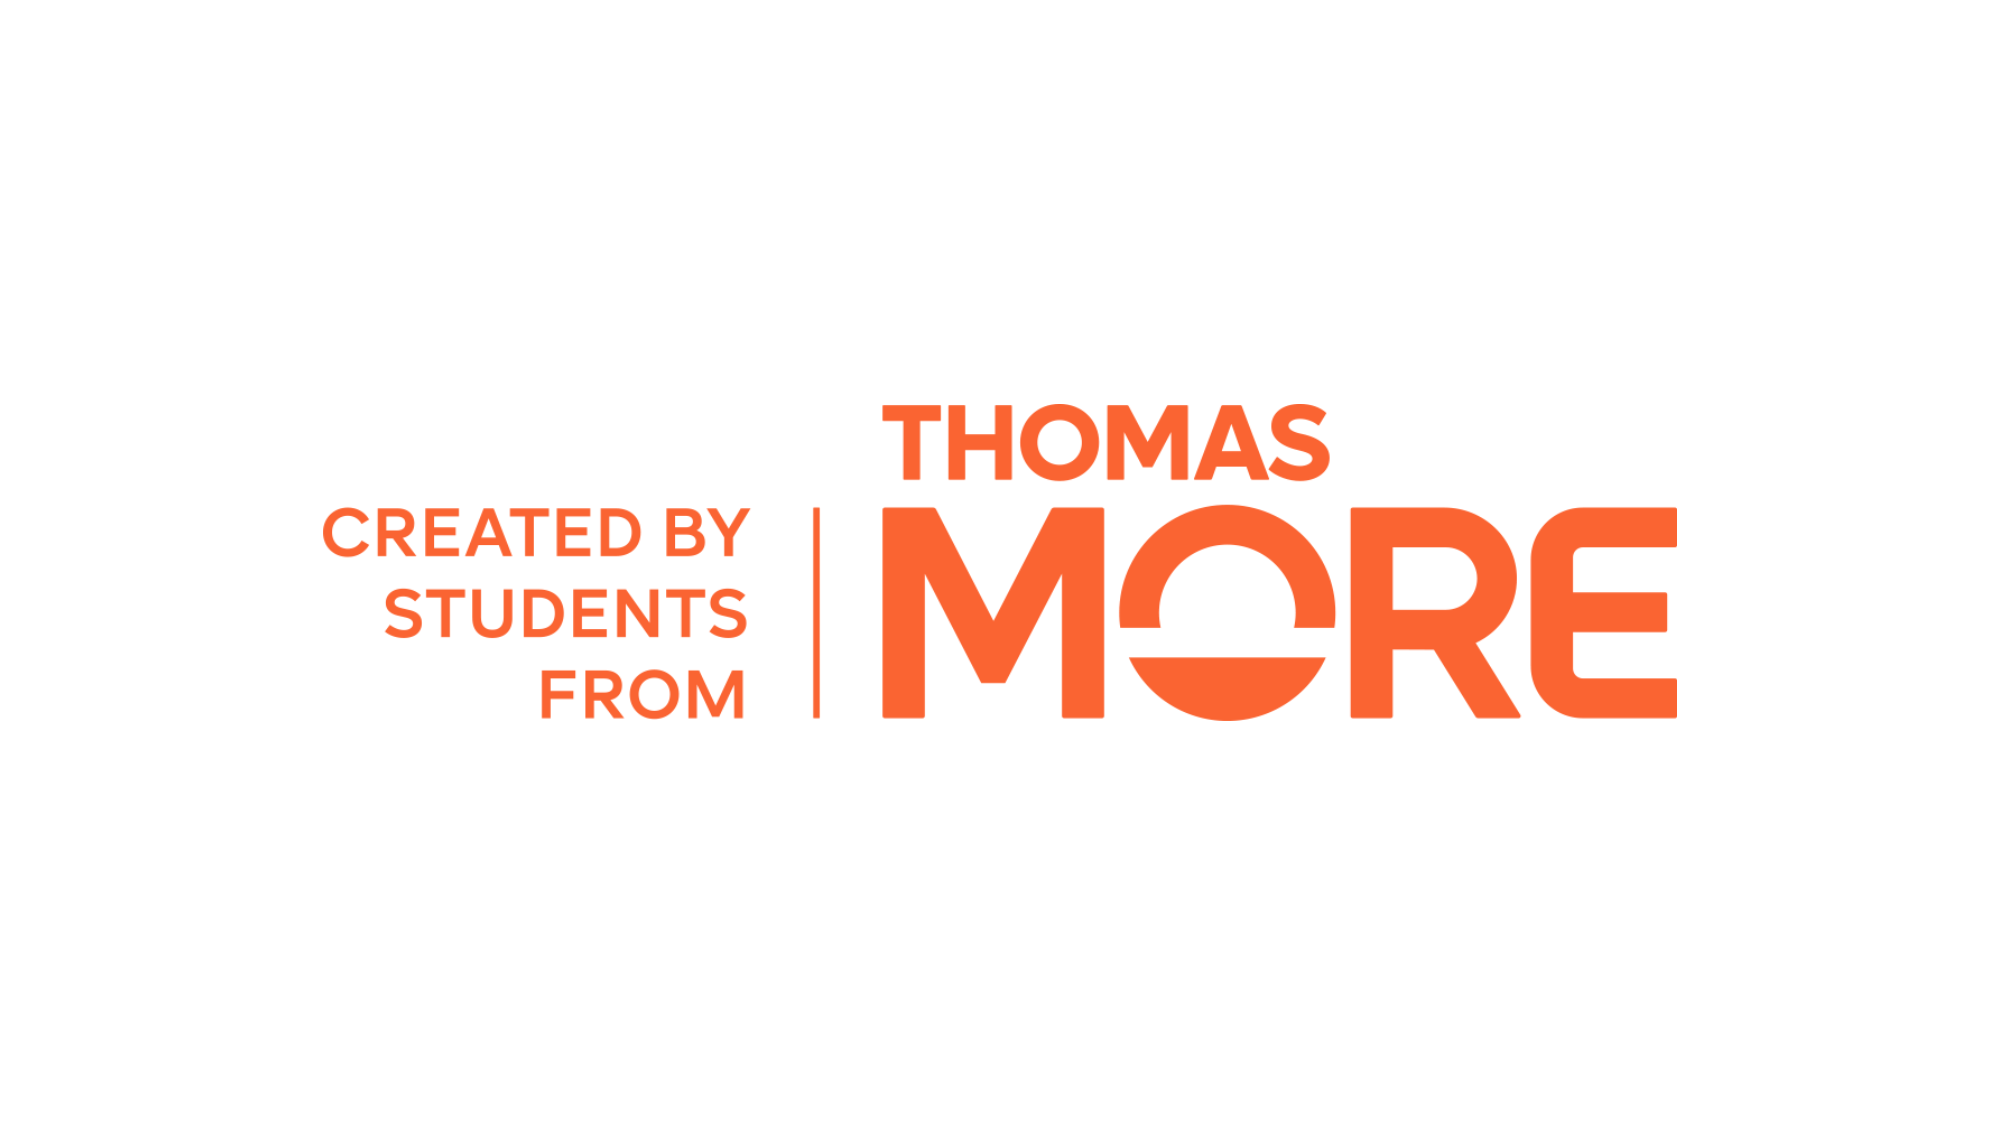 Marble sorting machine - Thomas More